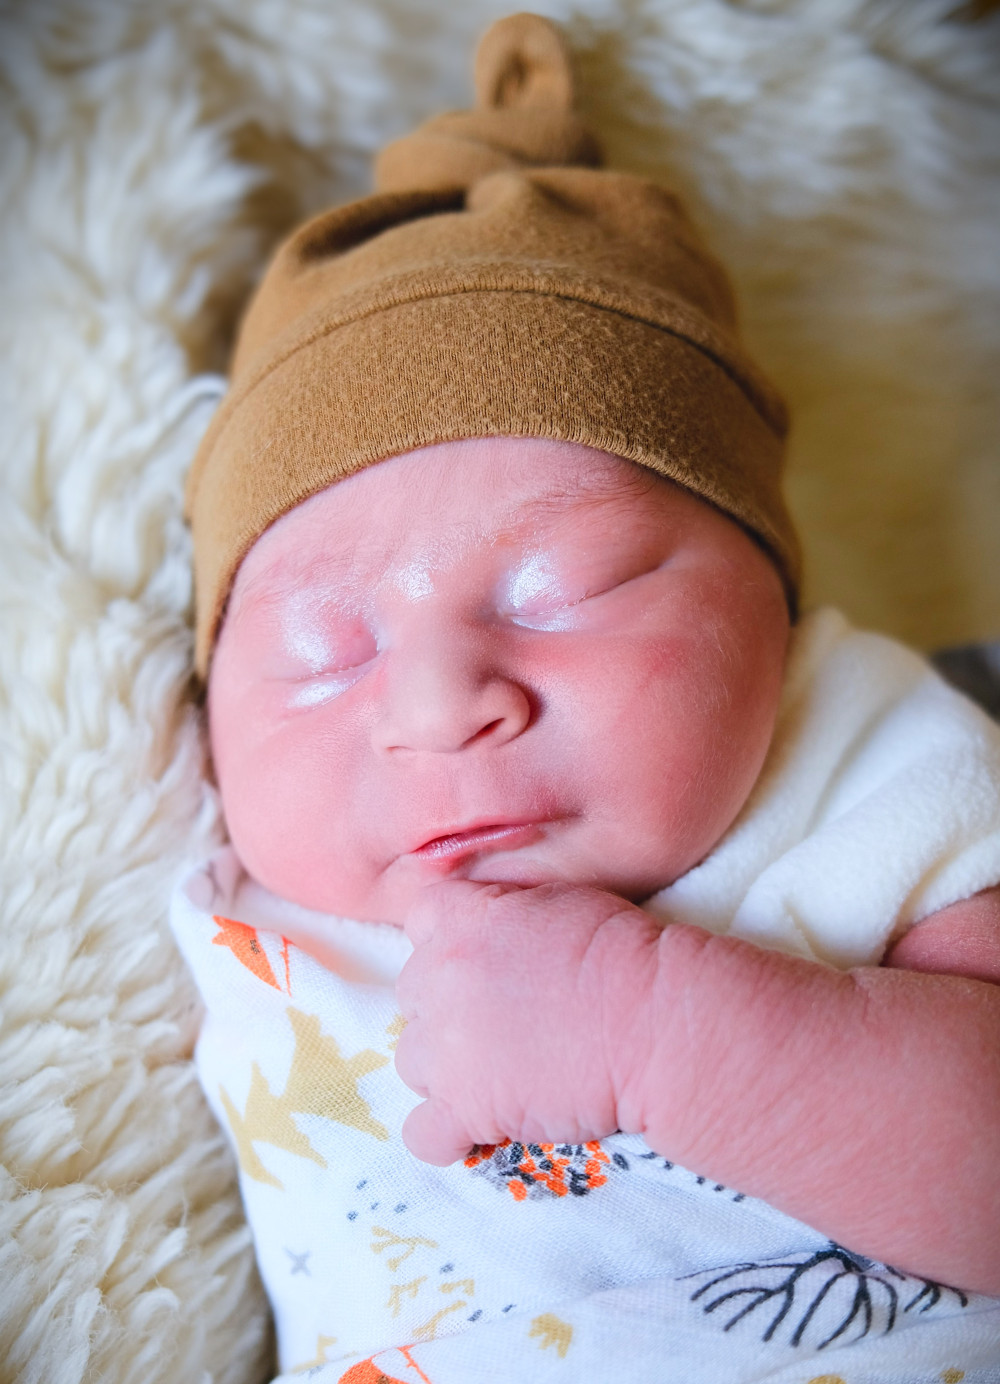 Baby Gerald Peyton Burrafato